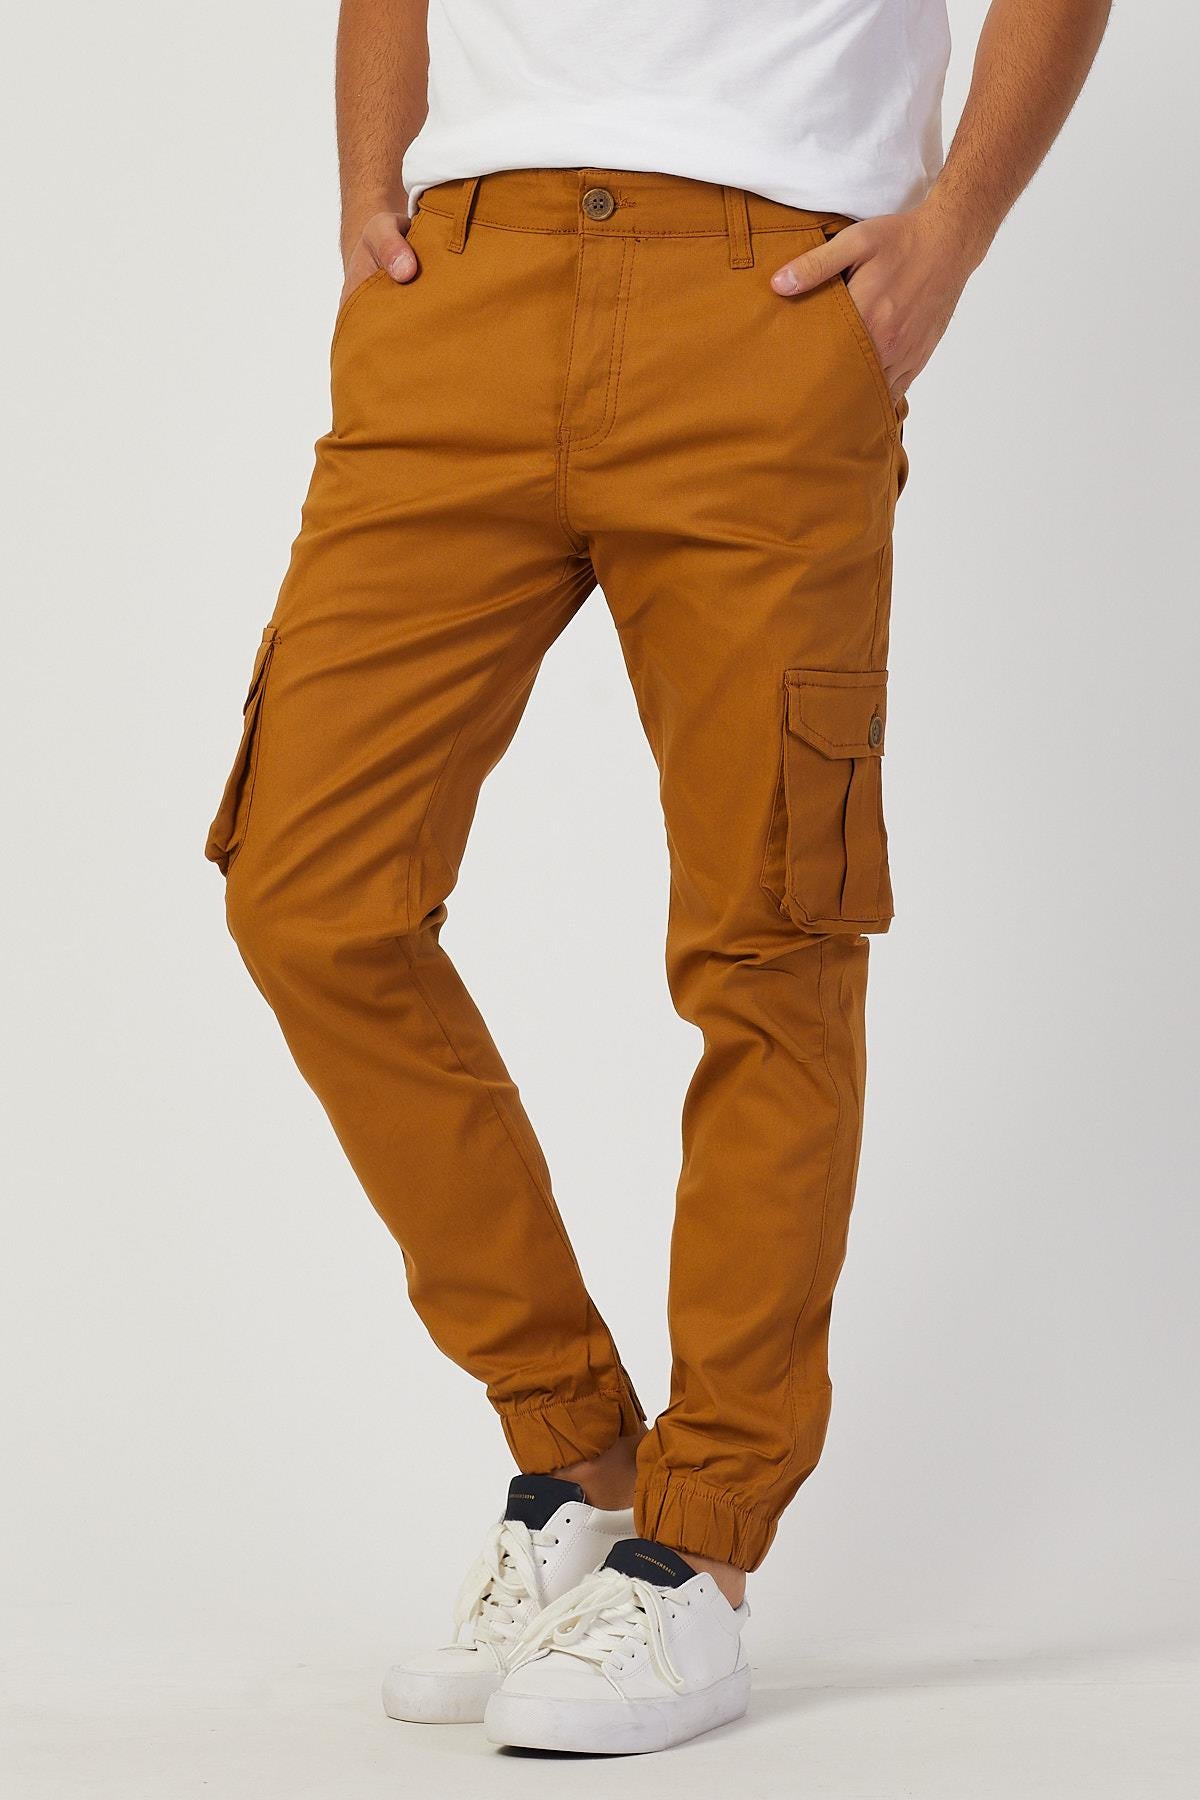 Slim Fit None denim as well as bellows pockets, buttoned, leg tire flexible fabric men's cargo pants